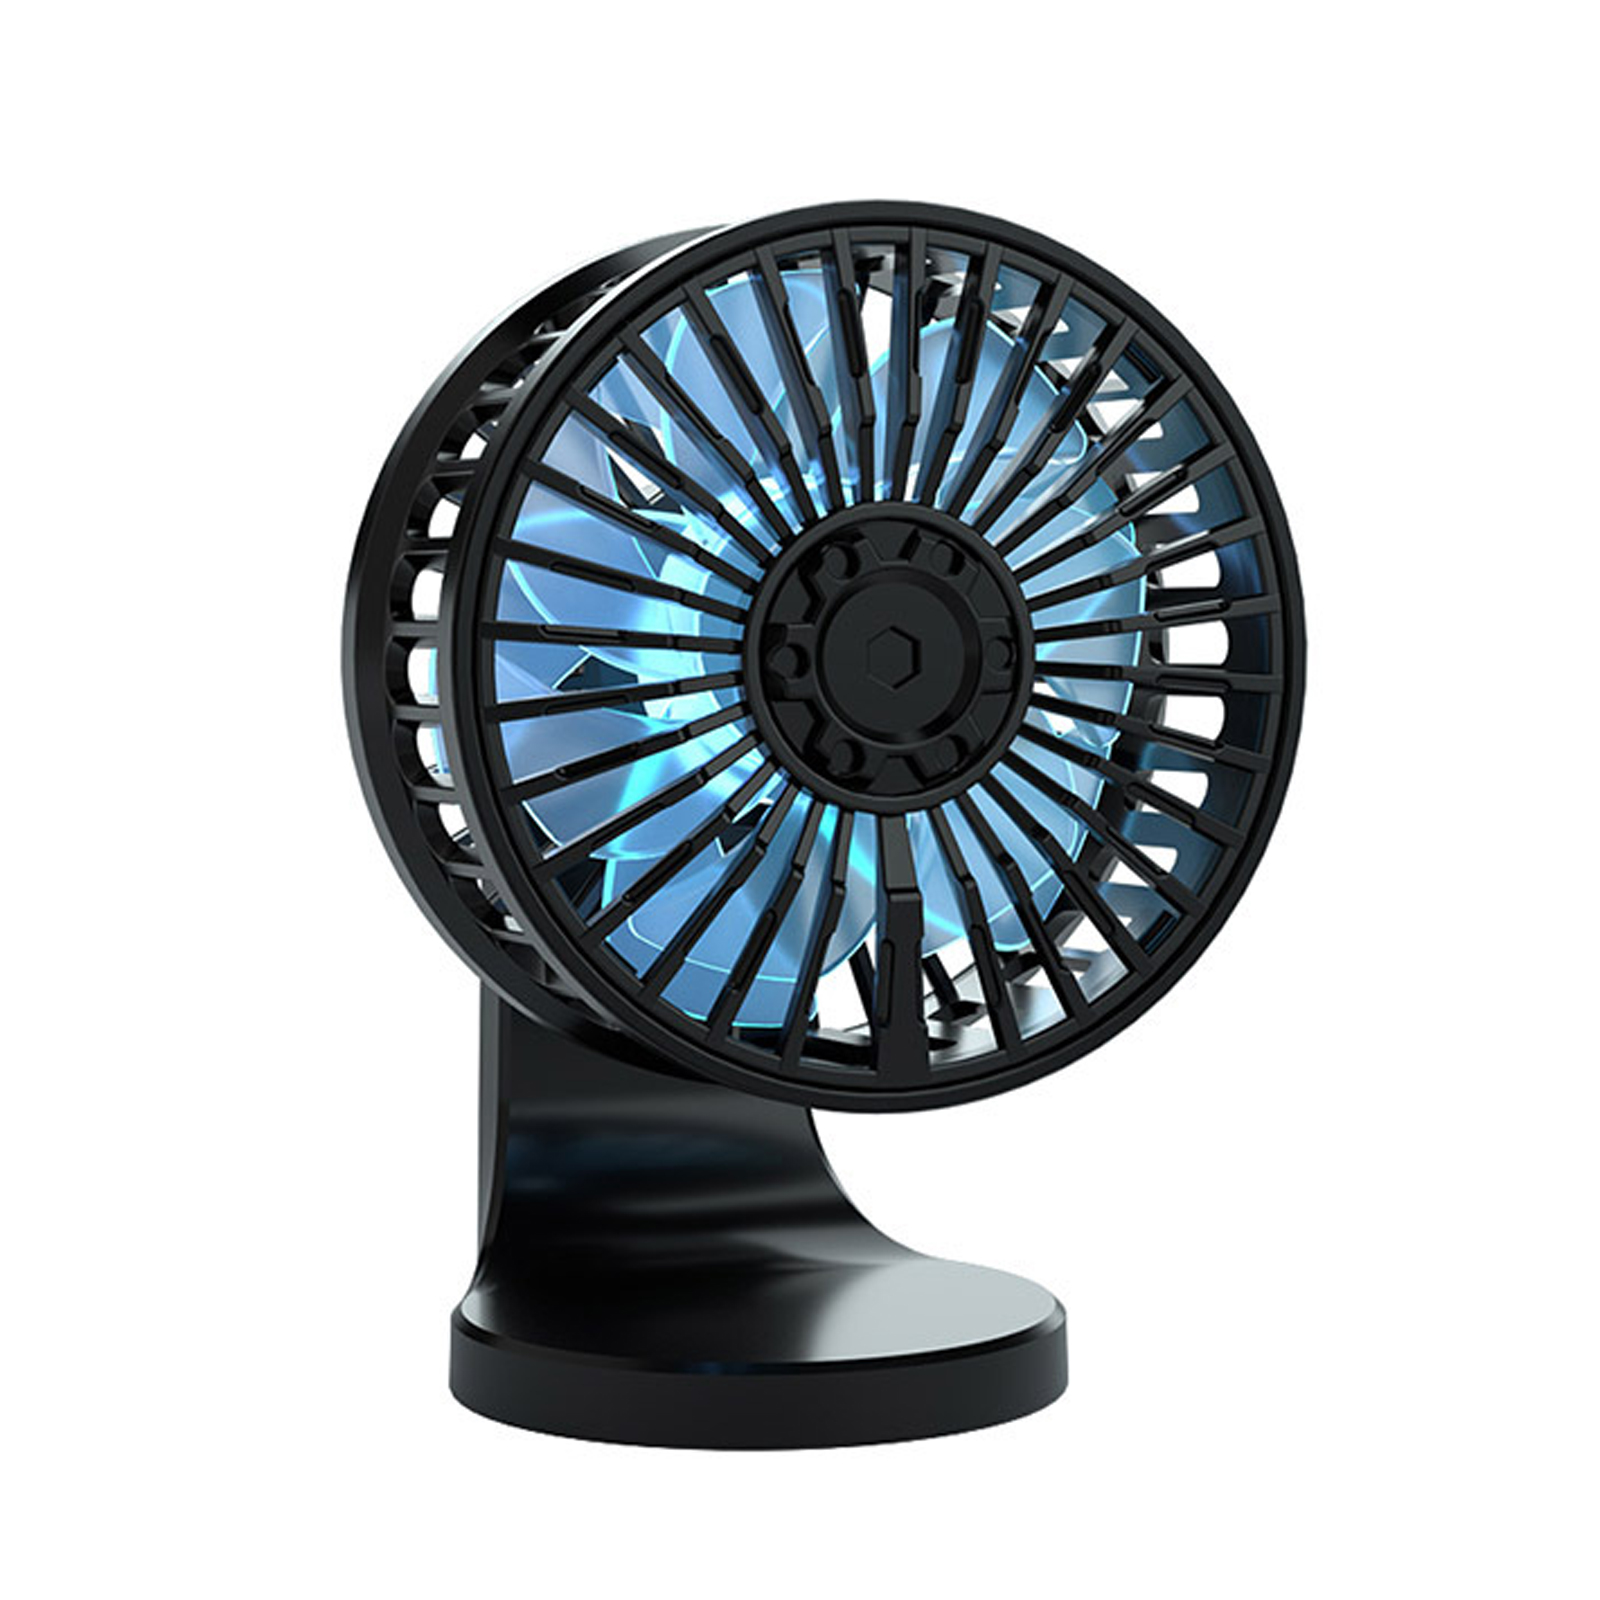 F210 USB Car Fan Multi-angle Rotation Dual Engine Windshield Desk Mount Fan Auto Cooler For Home Office